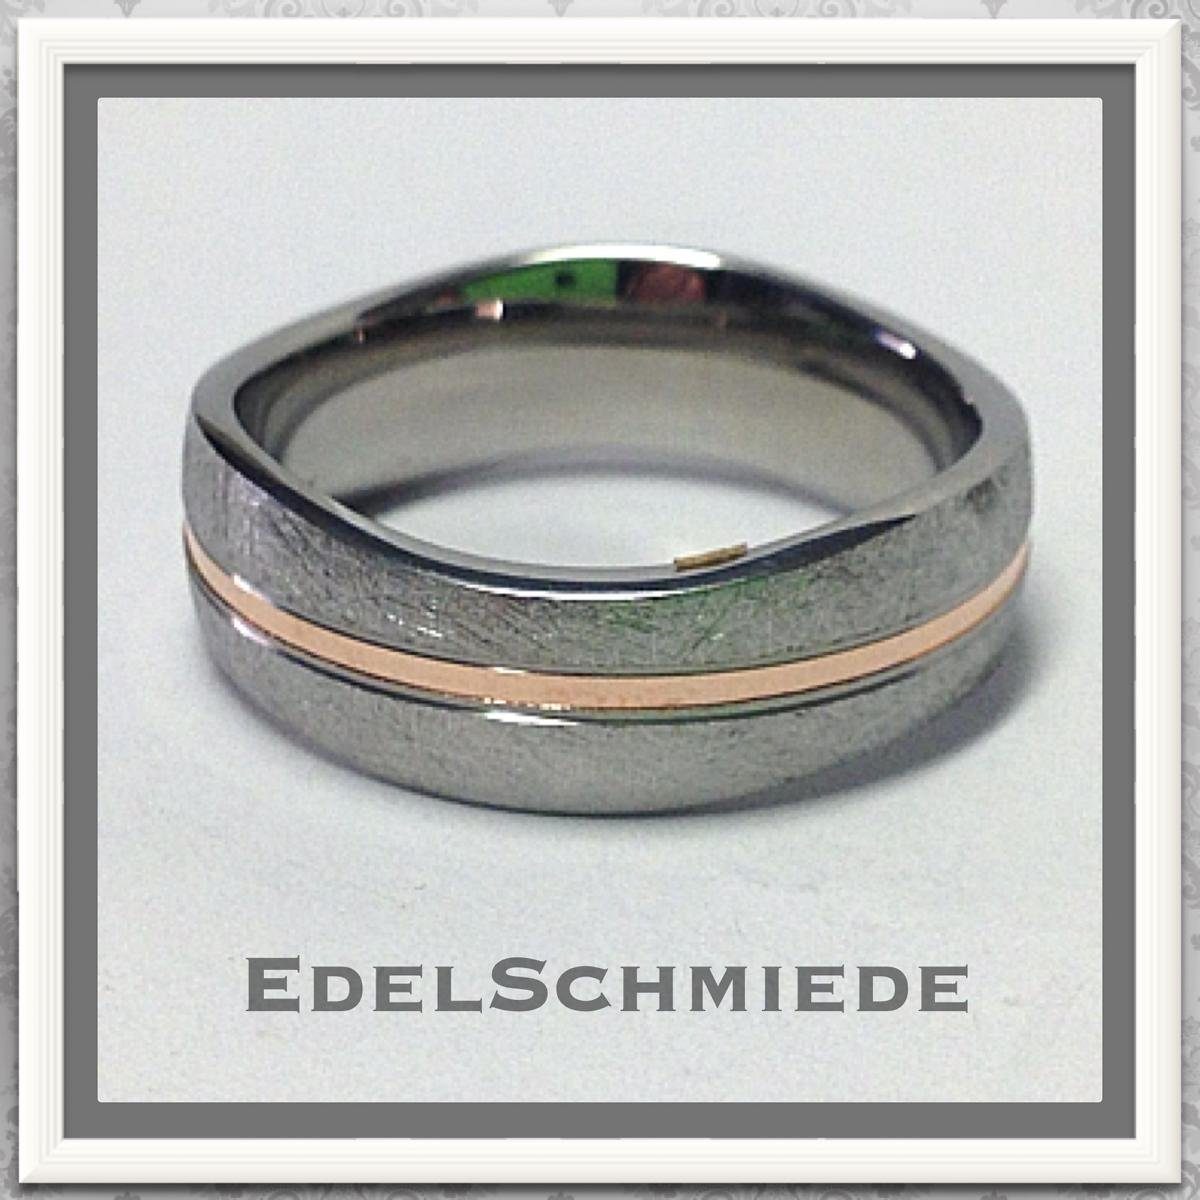 mit Herrenring 585 Silberring Edelstahl Ringgröße Edelschmiede925 Edelschmiede925 Rotgoldeinlage